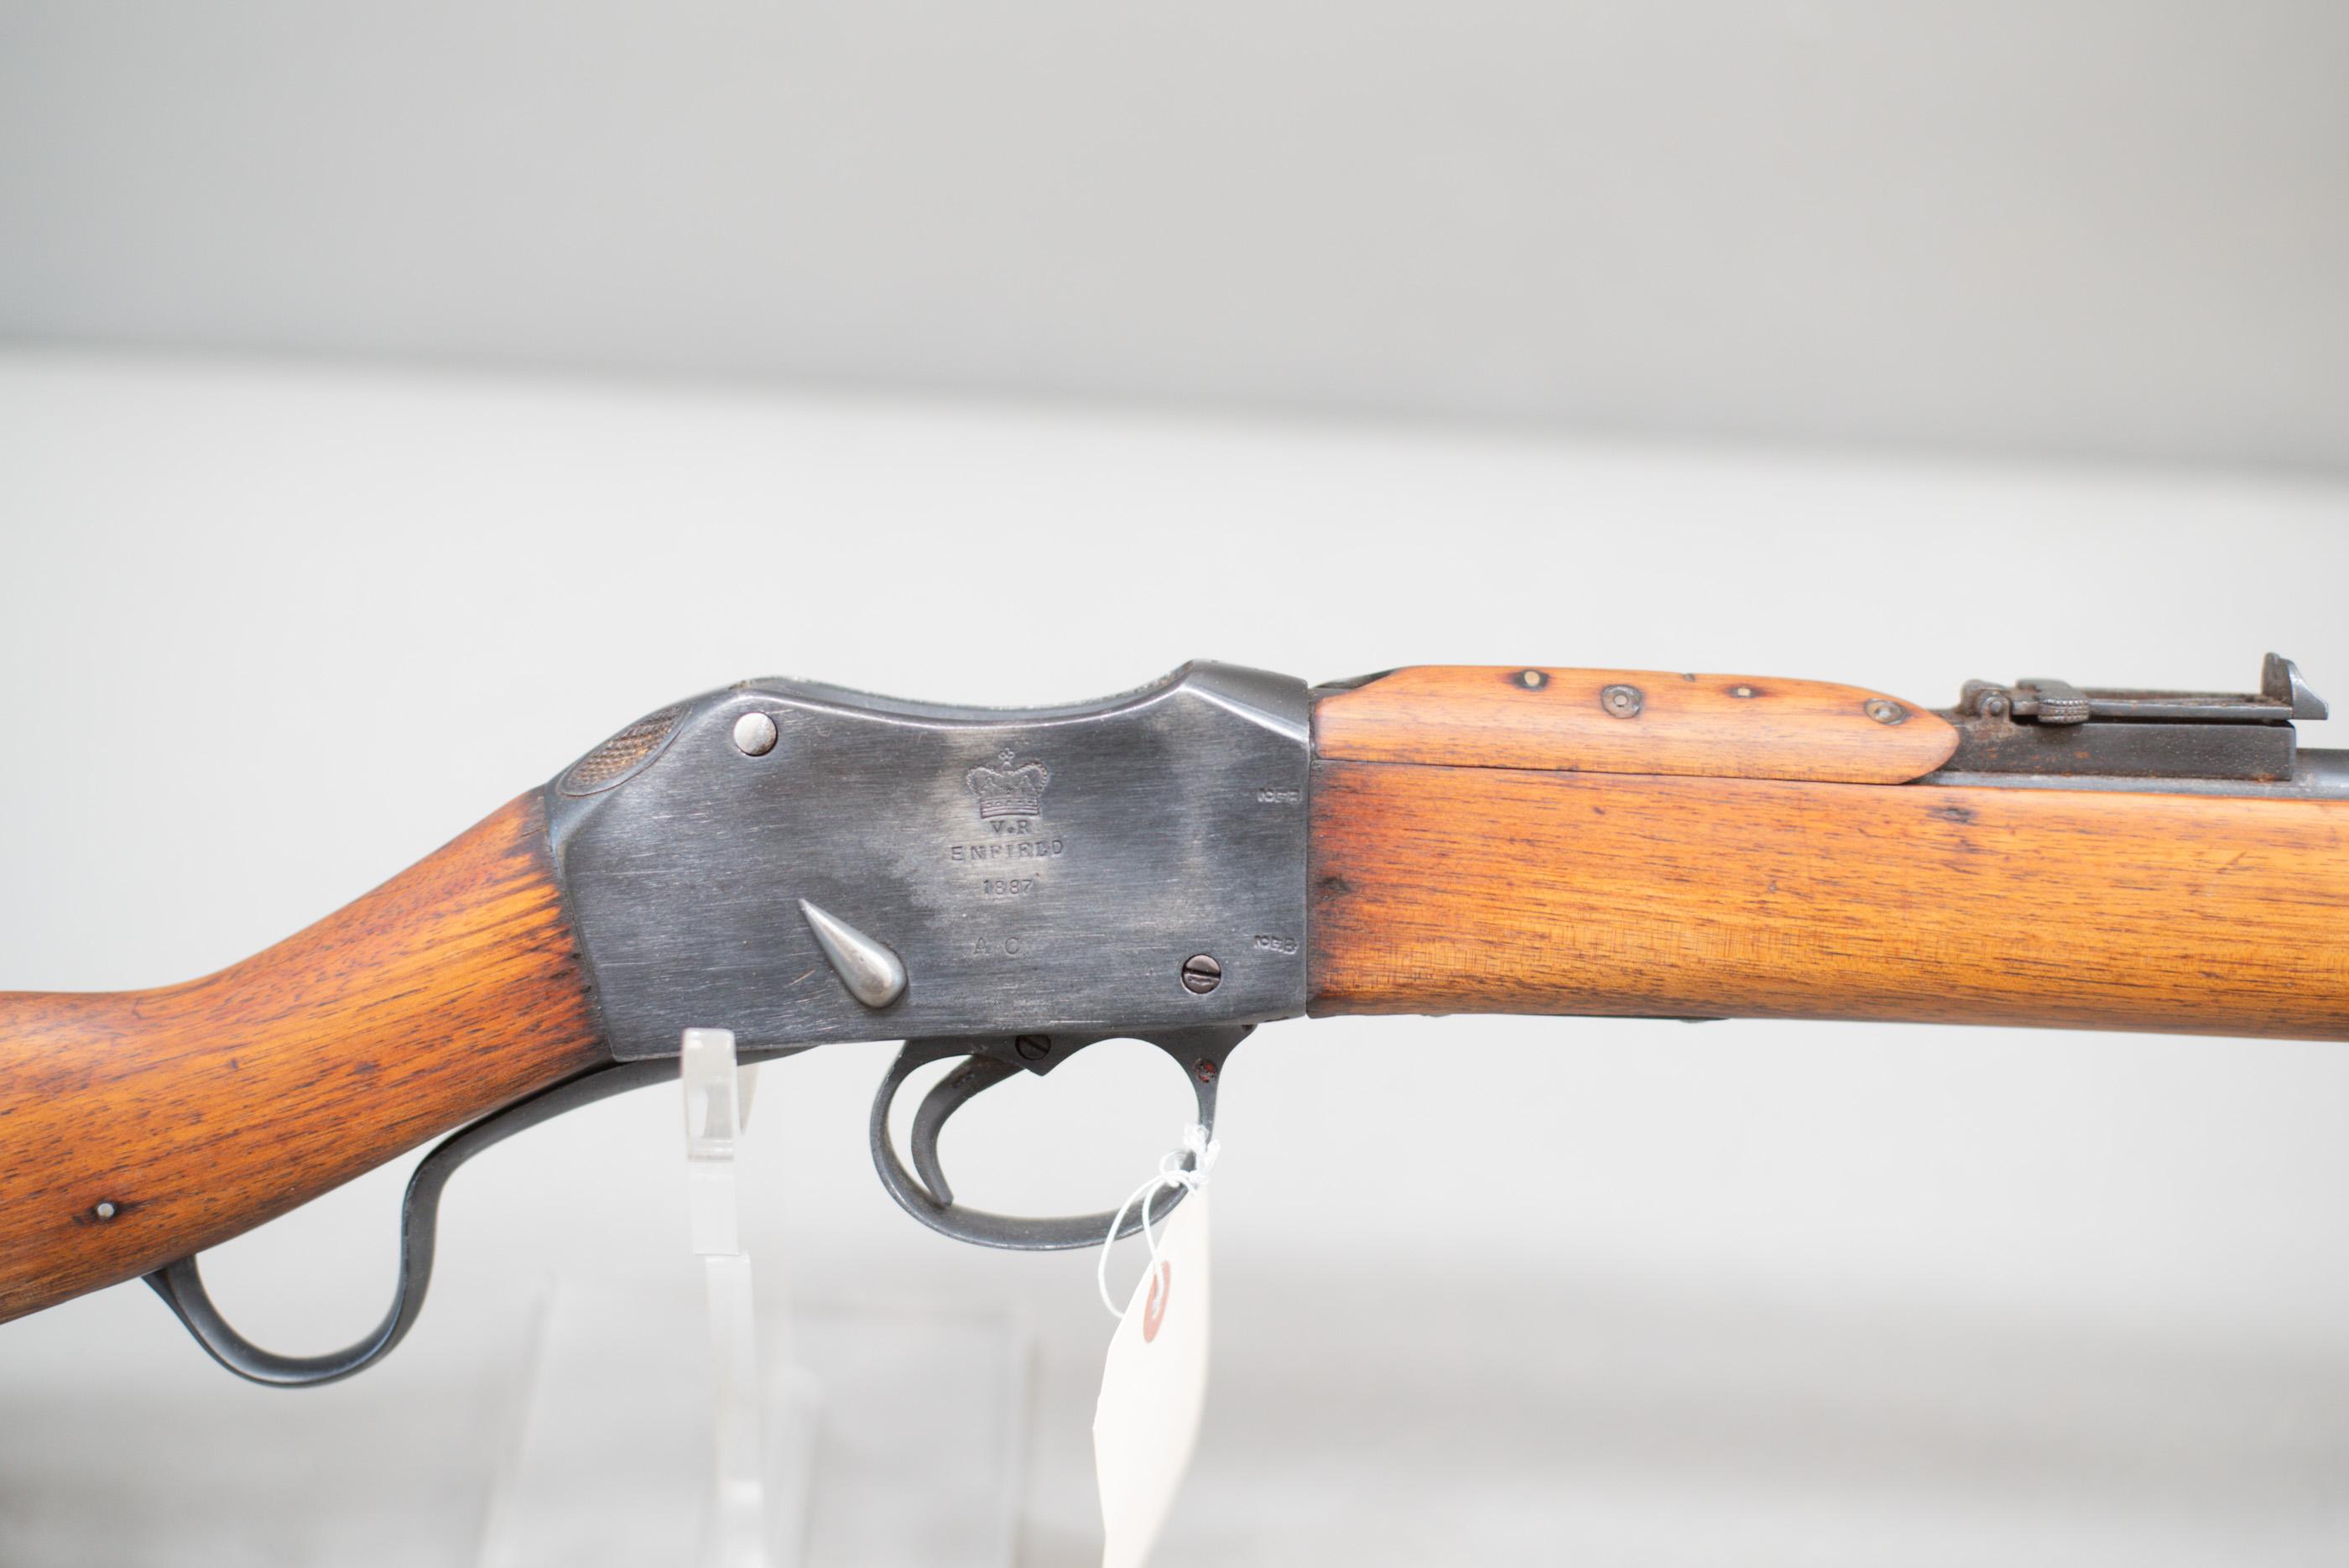 Enfield Martini-Henry .303 British Sporter Rifle